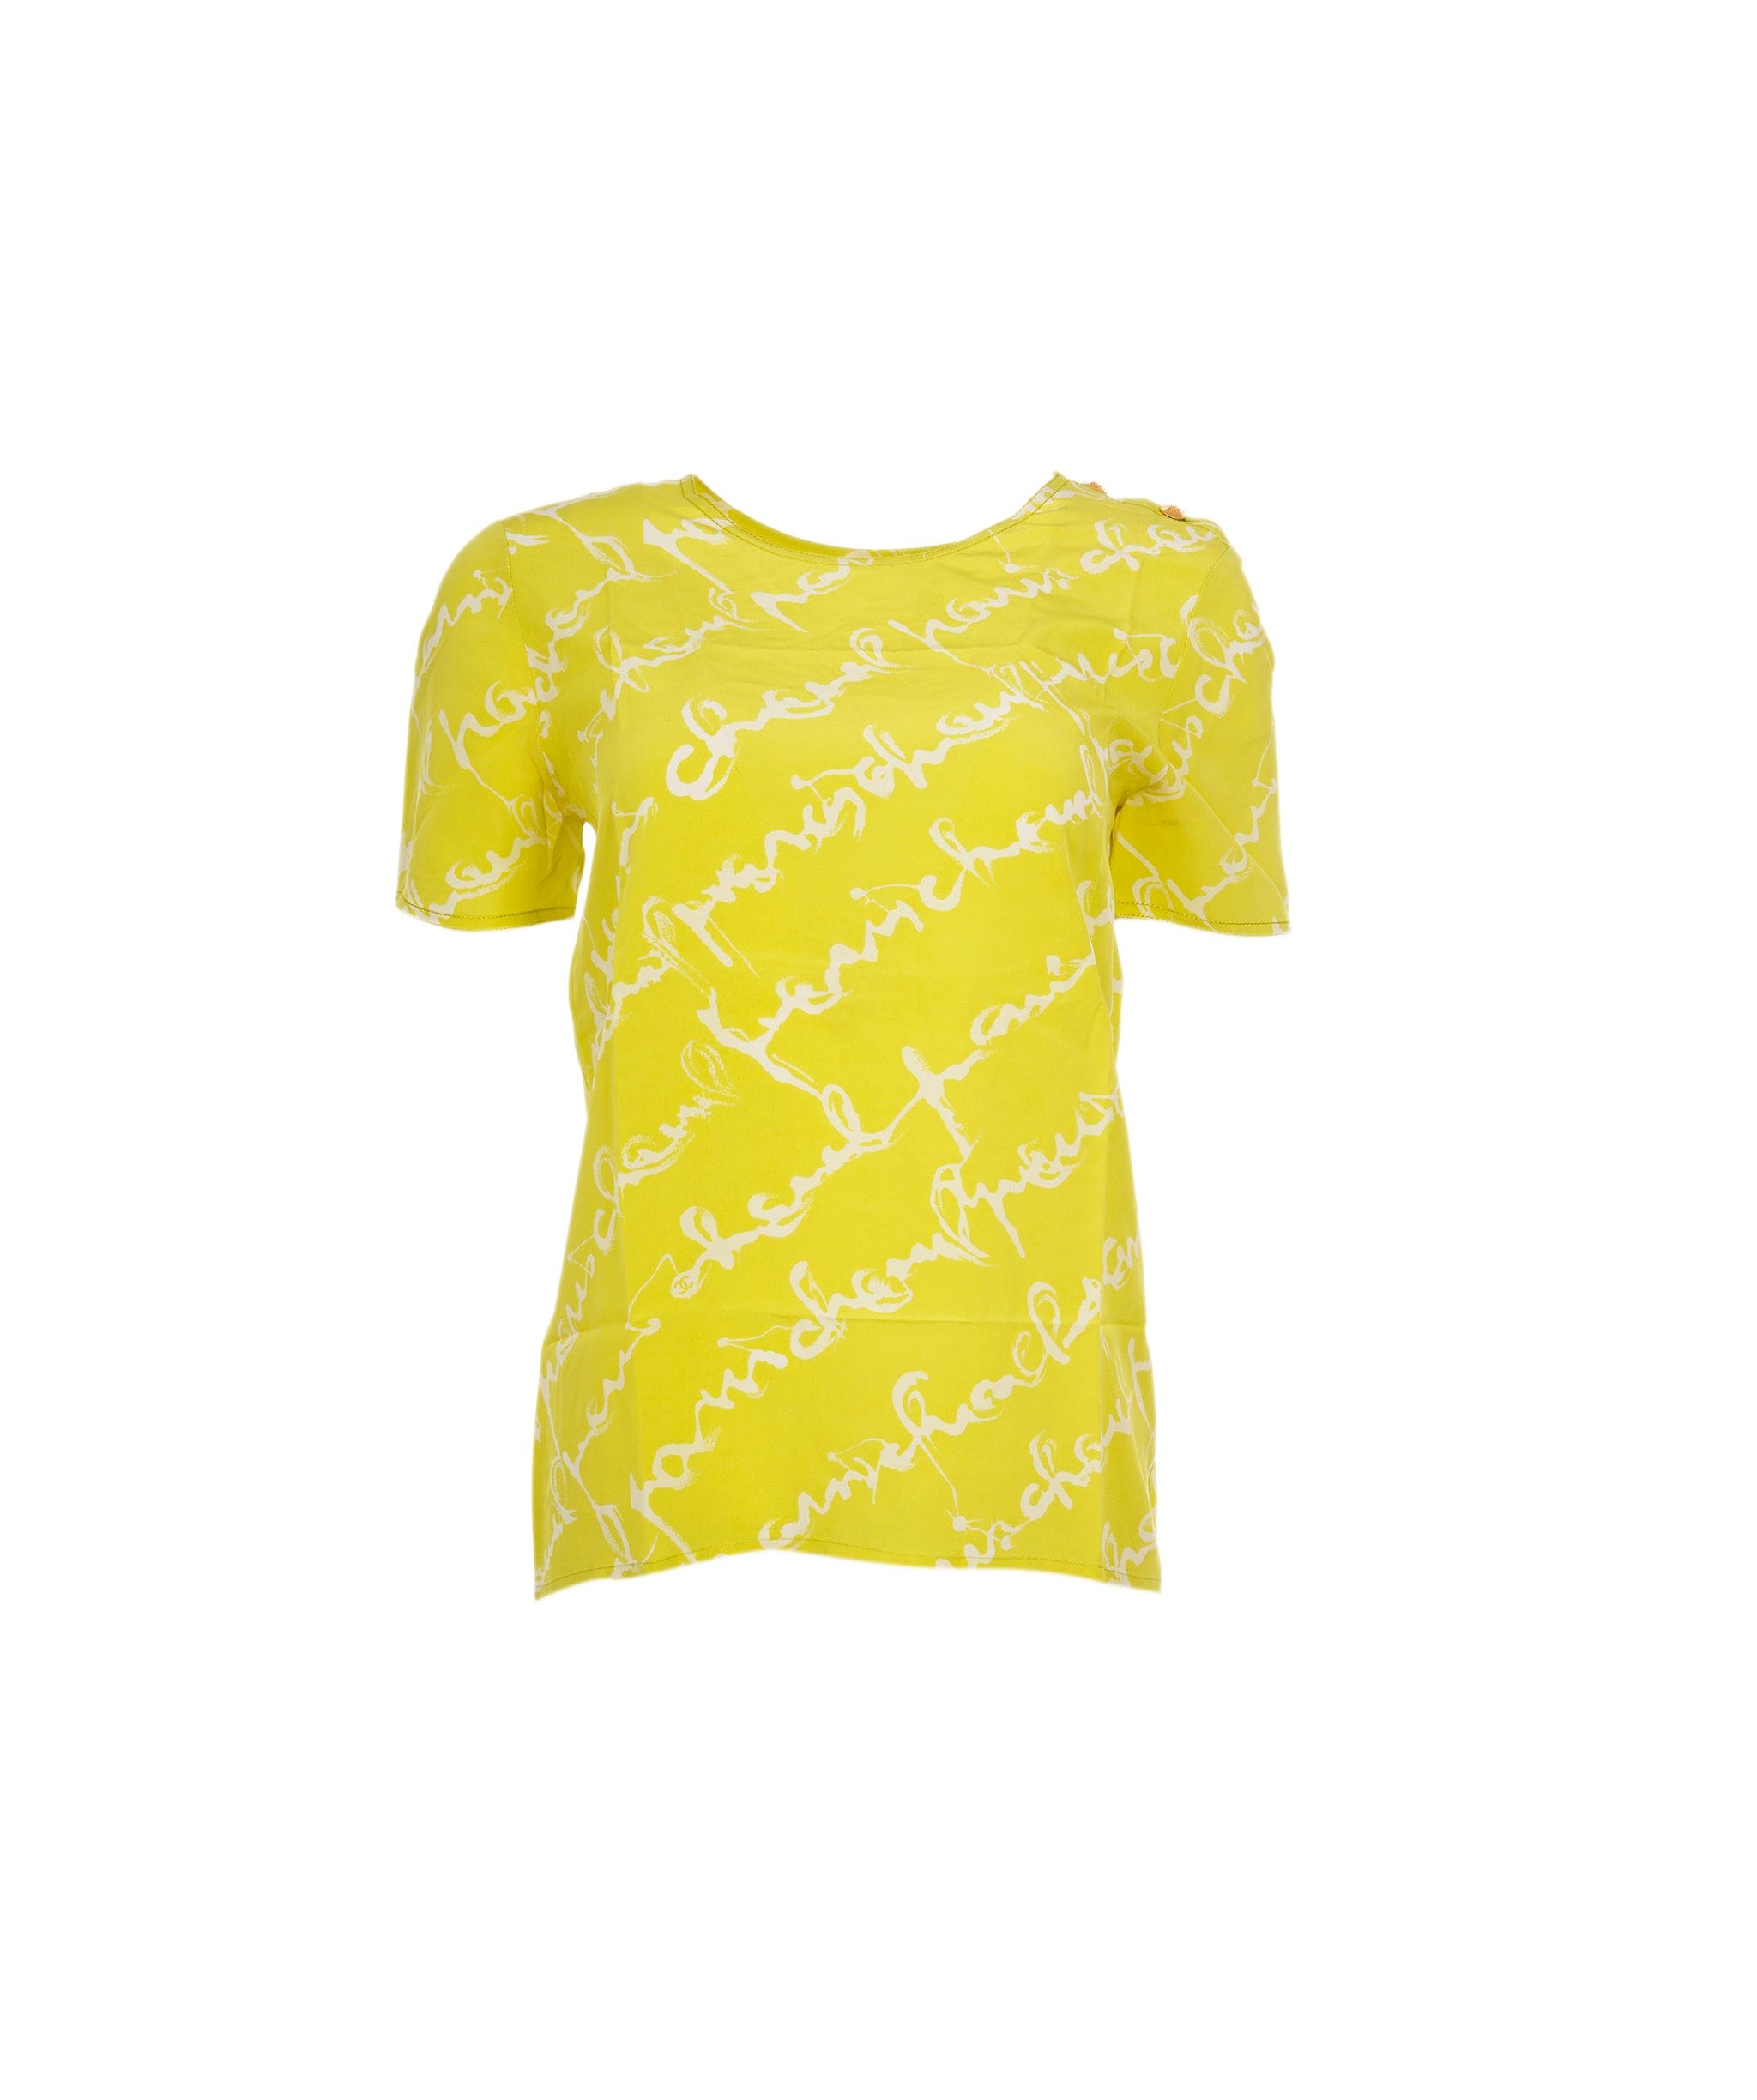 Chanel Chanel Logo Silk Top Yellow ASL8258